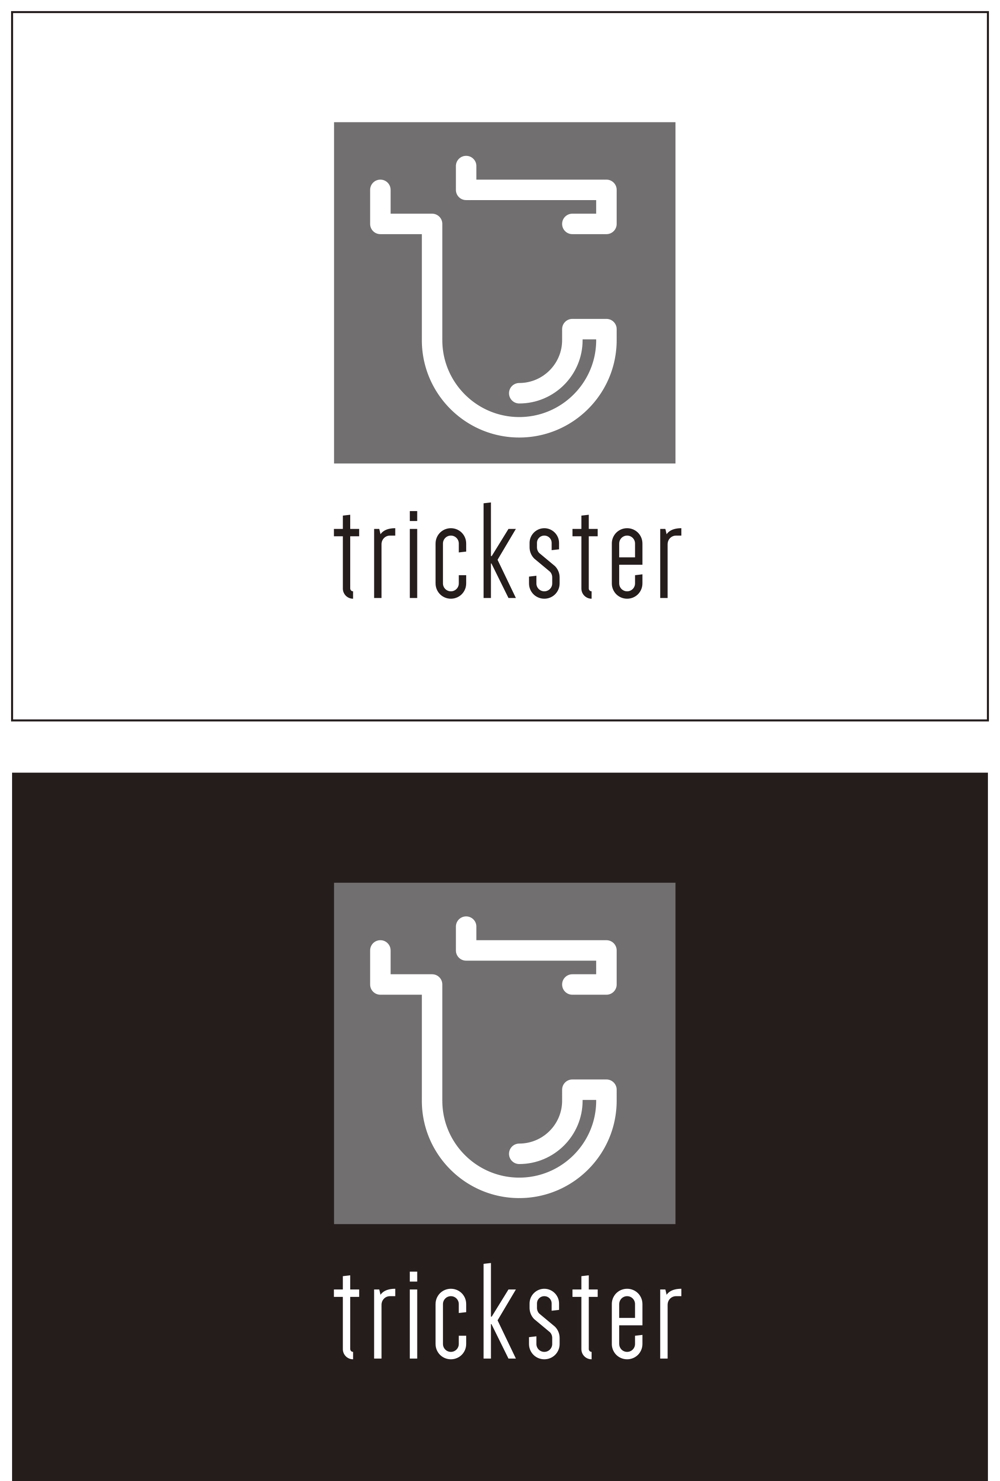 trickster-001.jpg